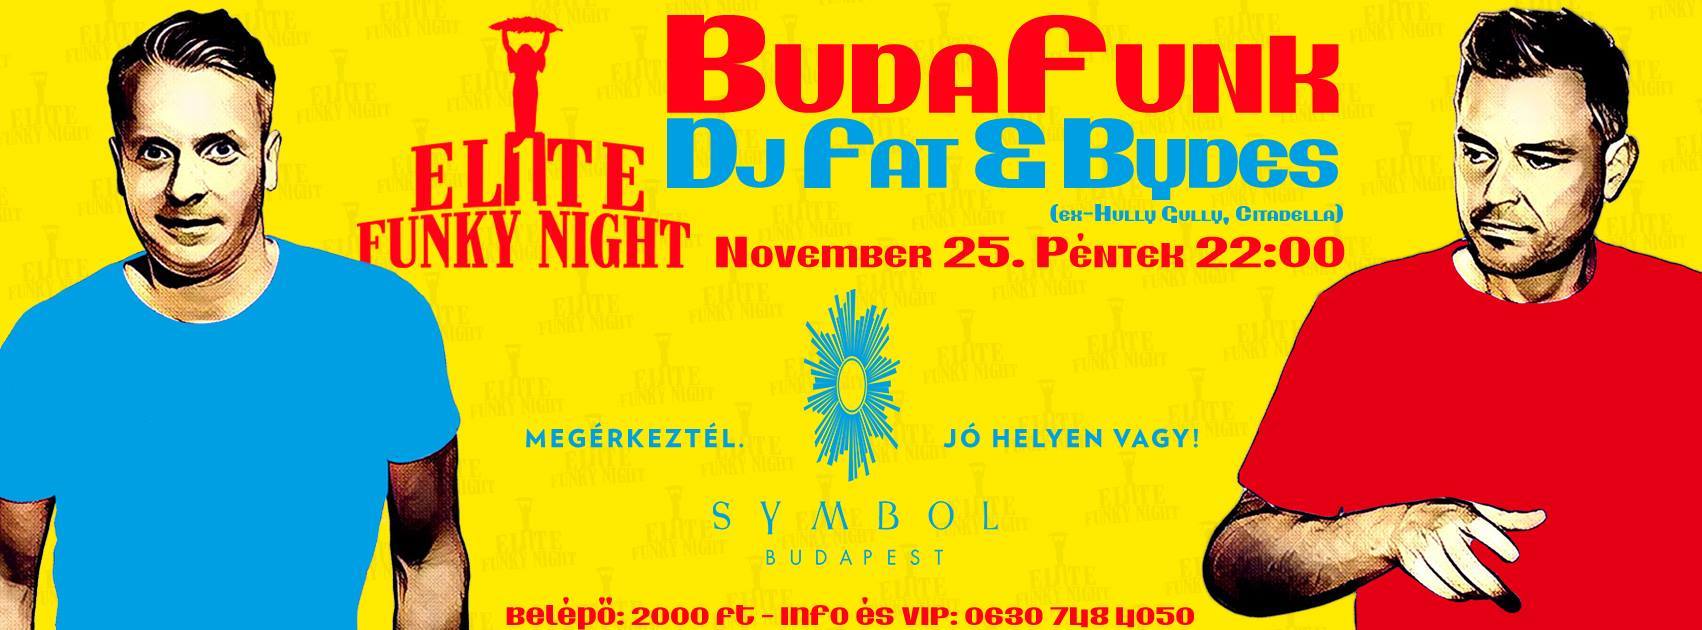 El1te Funky Night - BudaFunk: Dj Fat & Bydes 